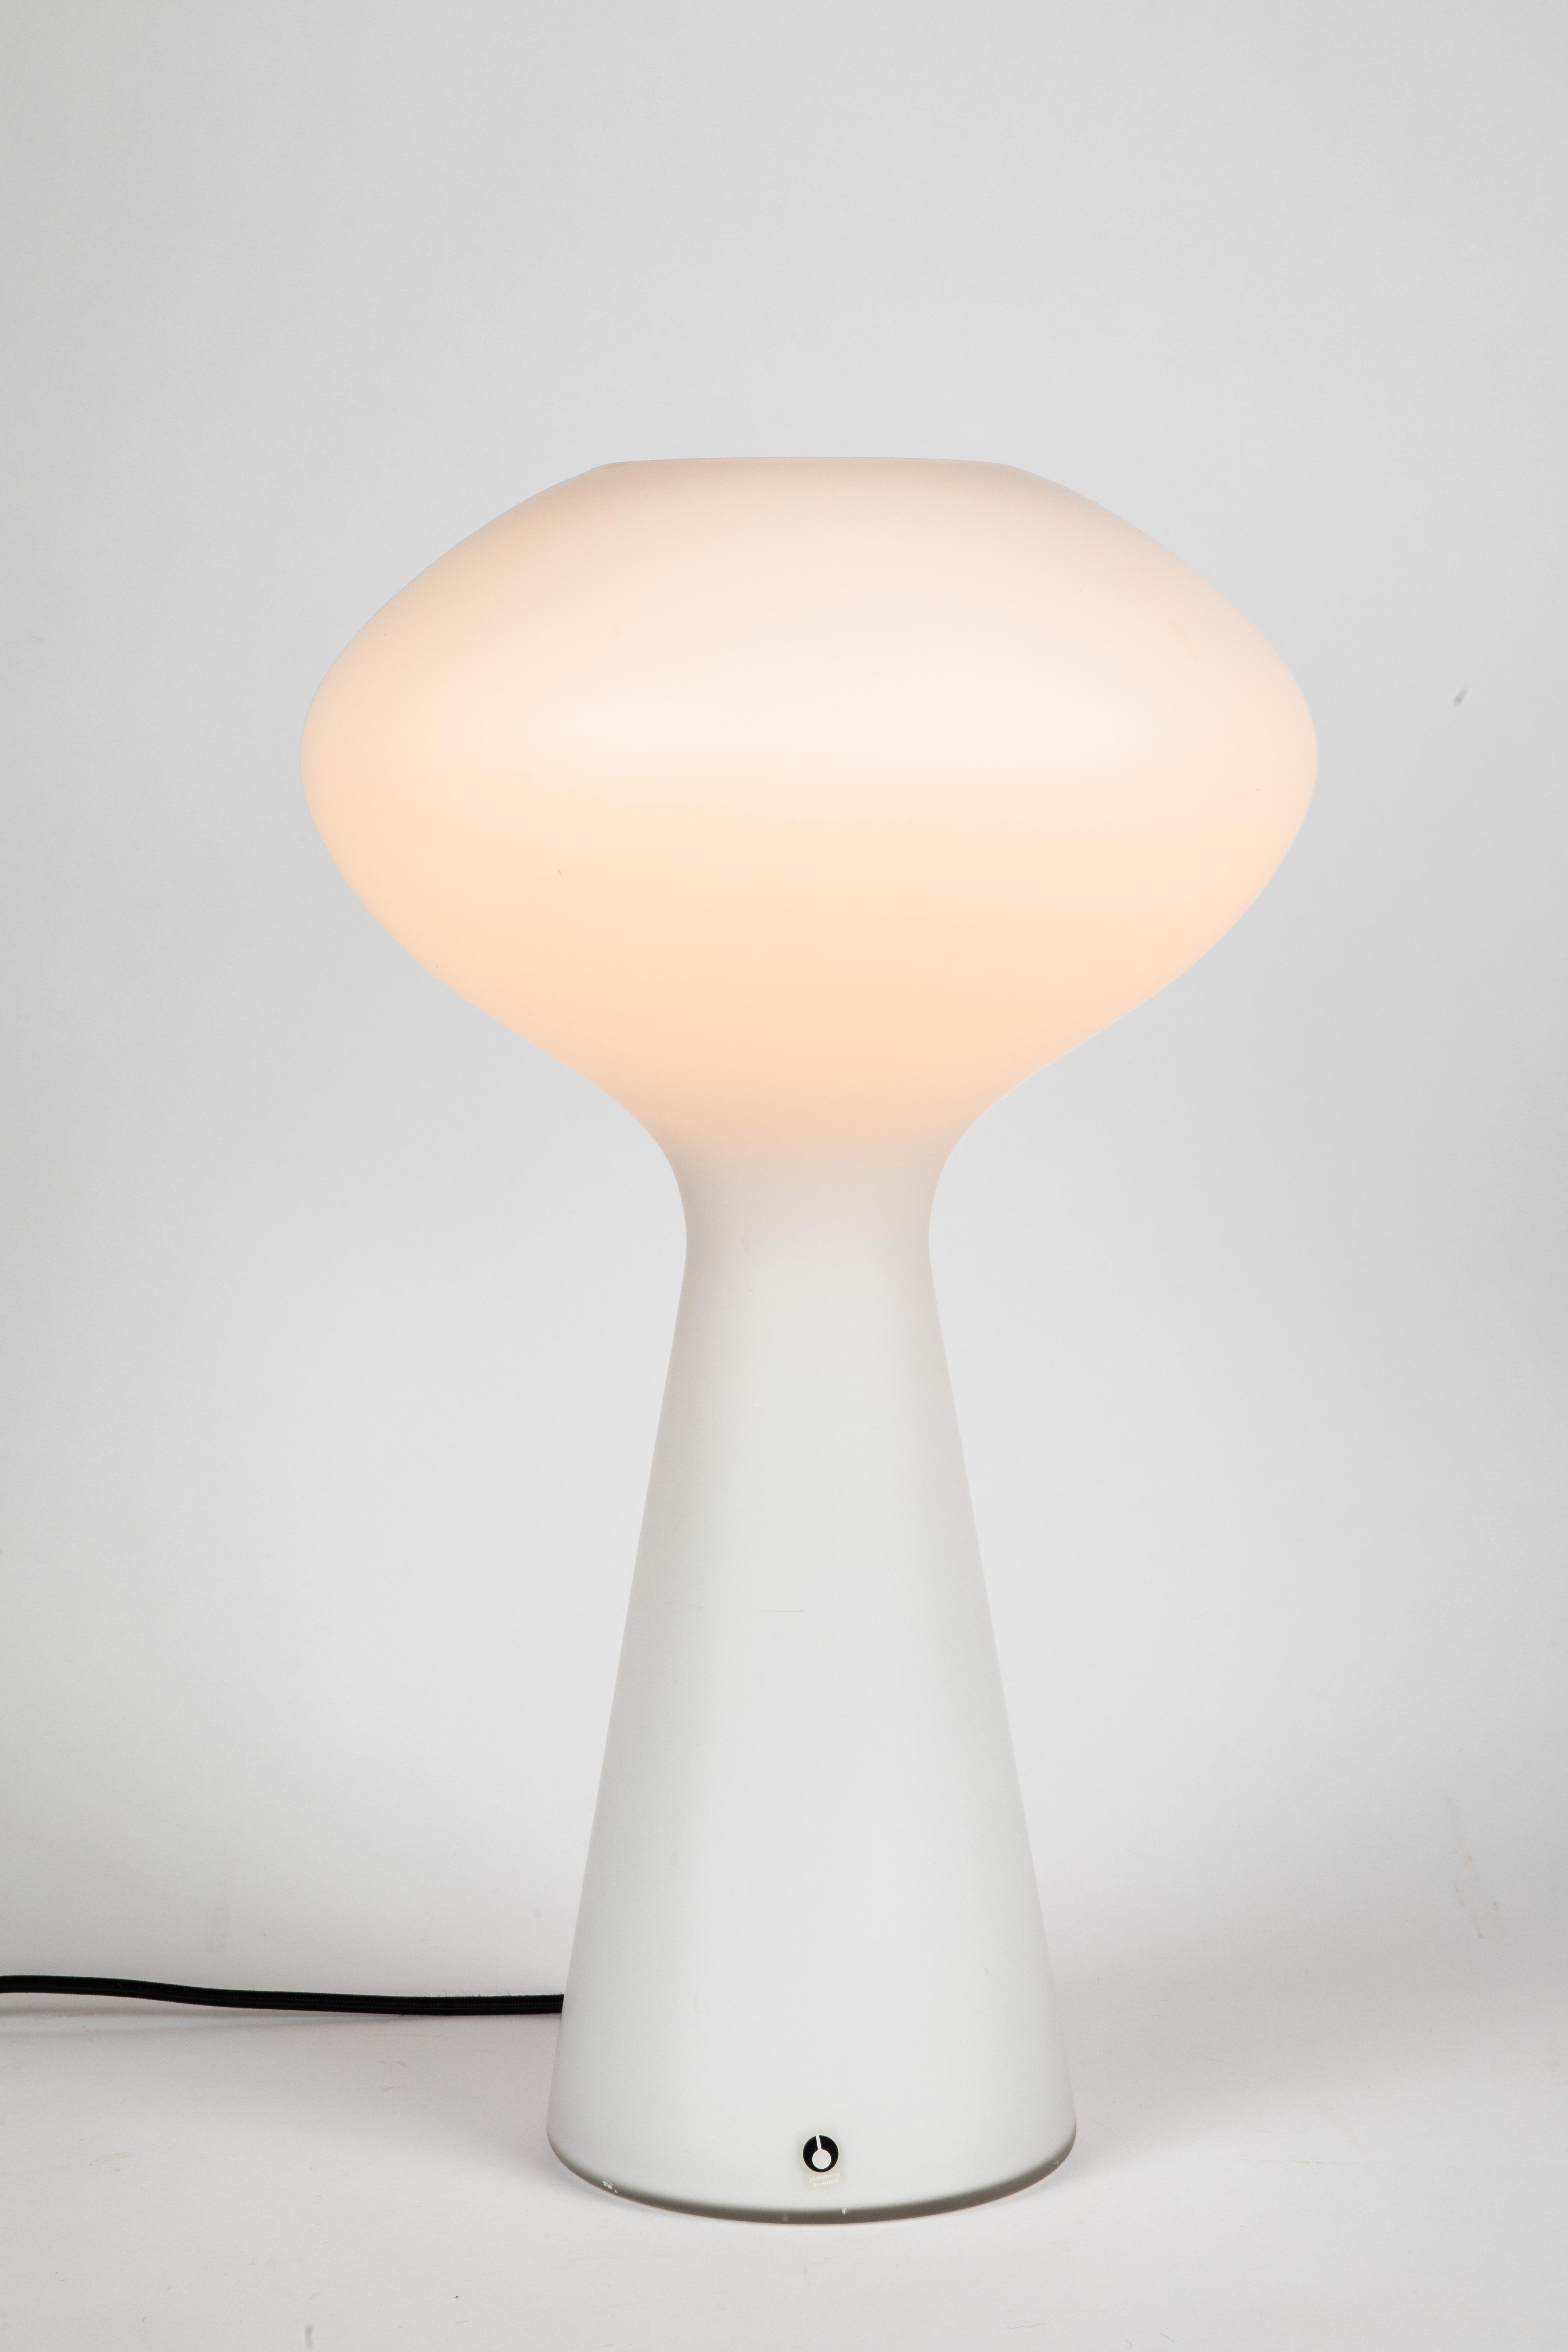 Scandinavian Modern 1950s Lisa Johansson-Pape Table Lamp for Iittala